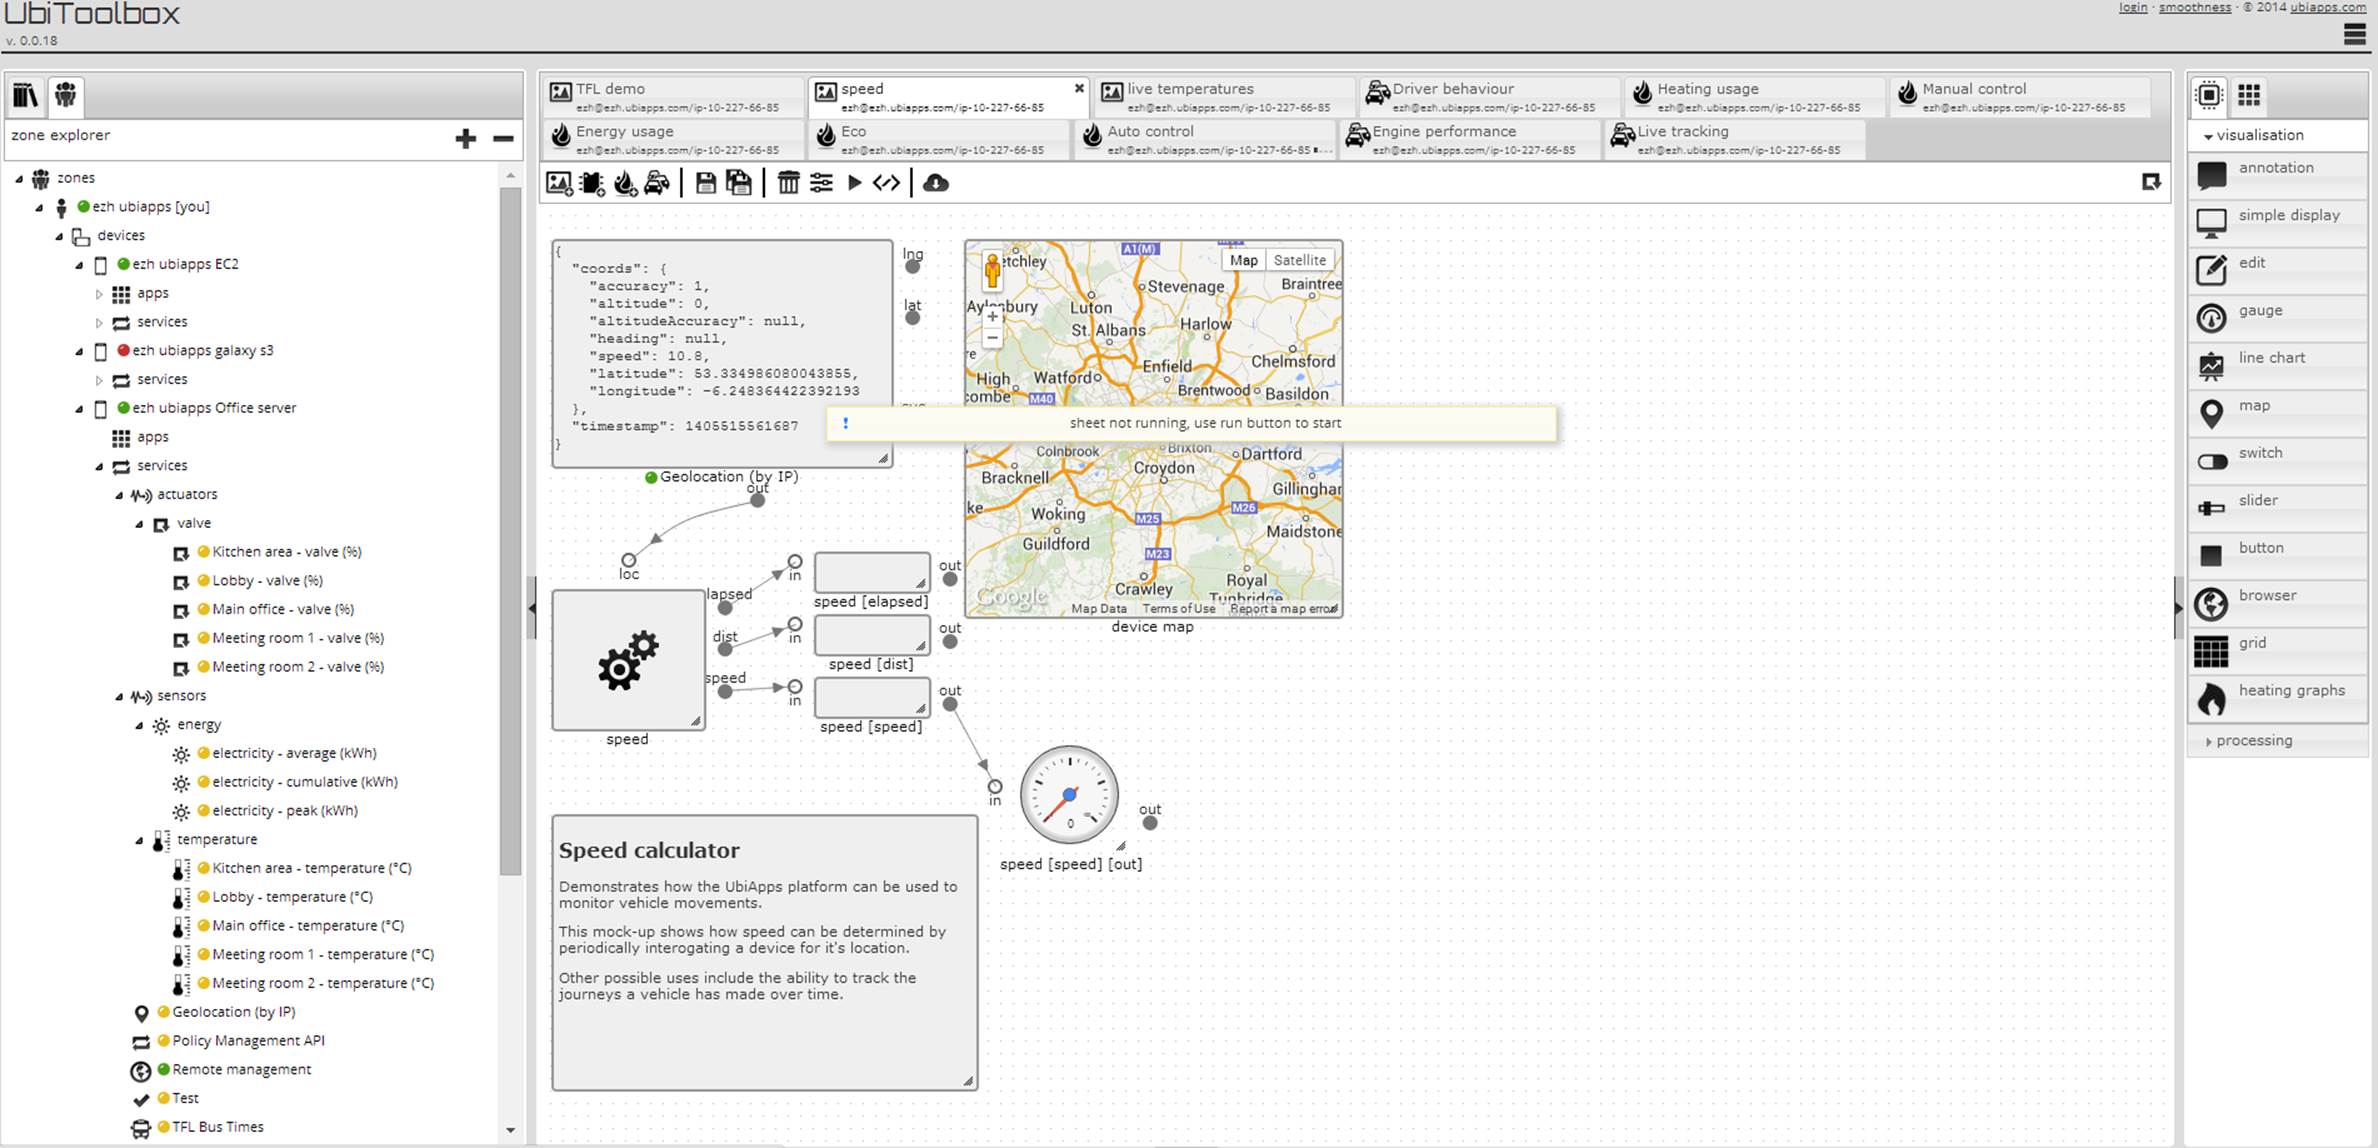 screenshot of Ubi Toolbox